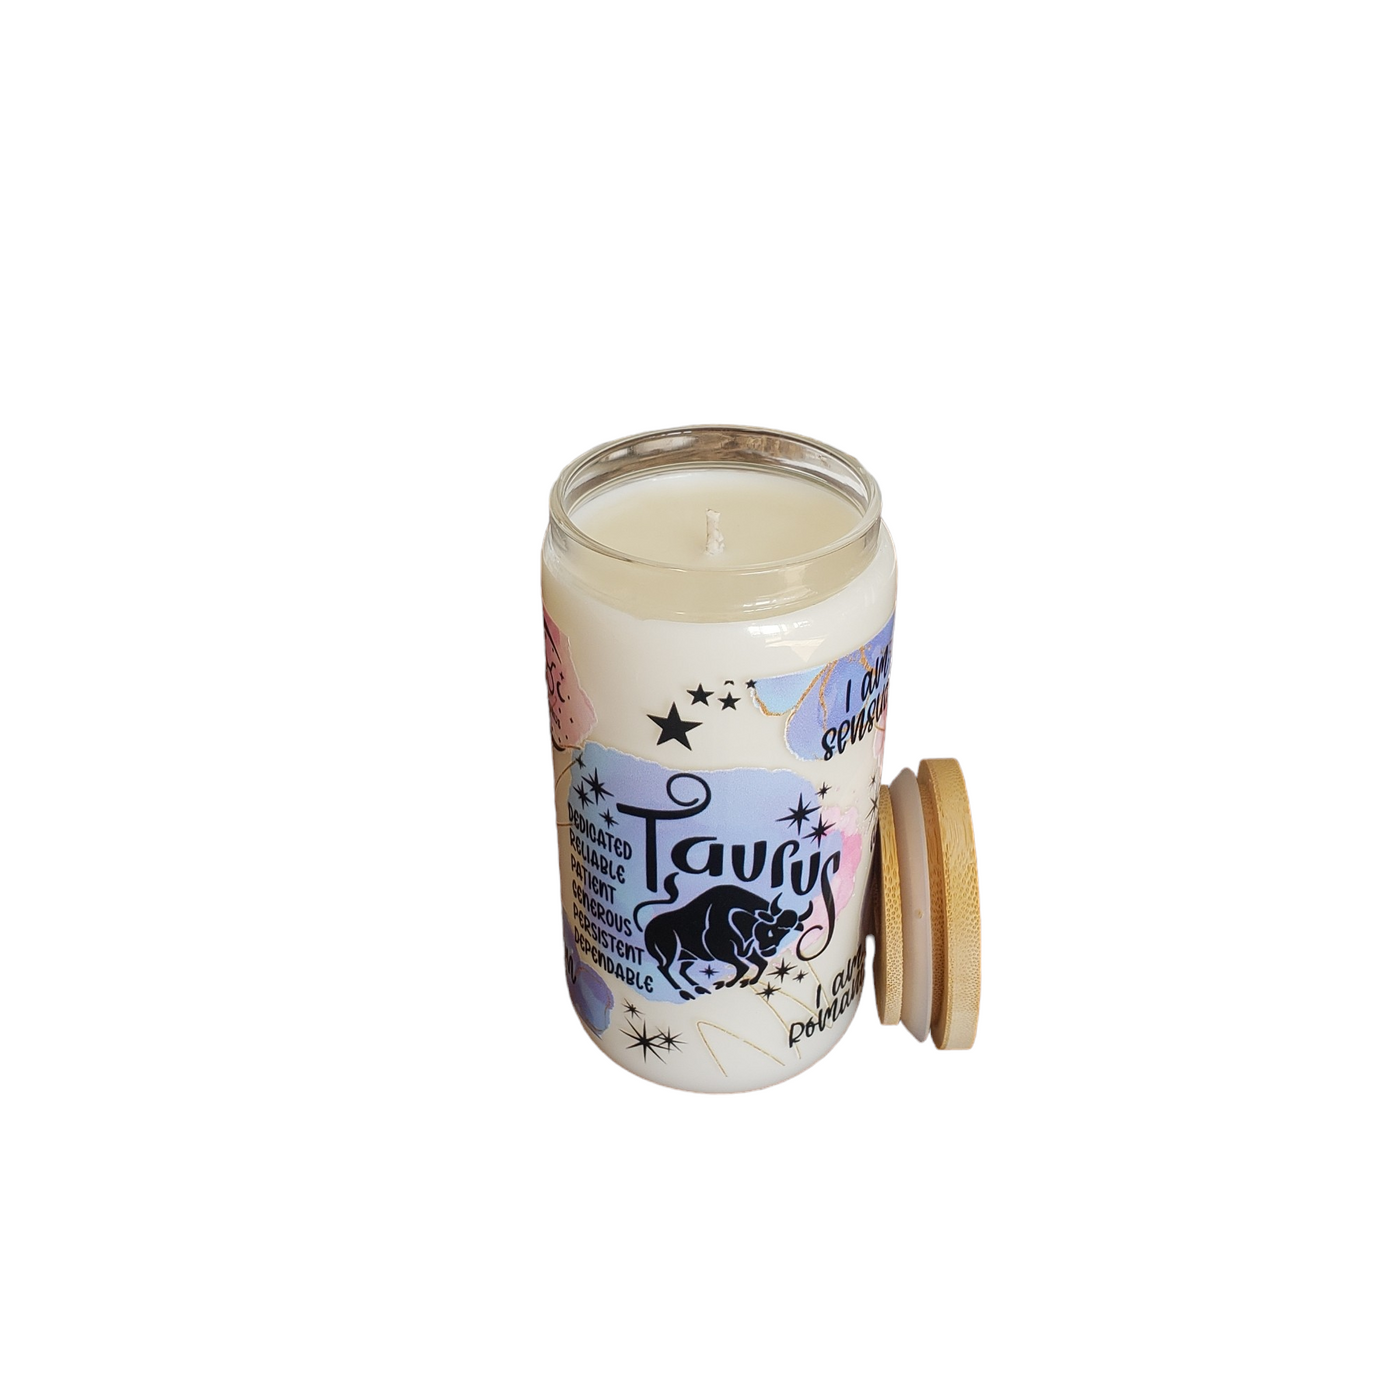 Taurus Zodiac Candle